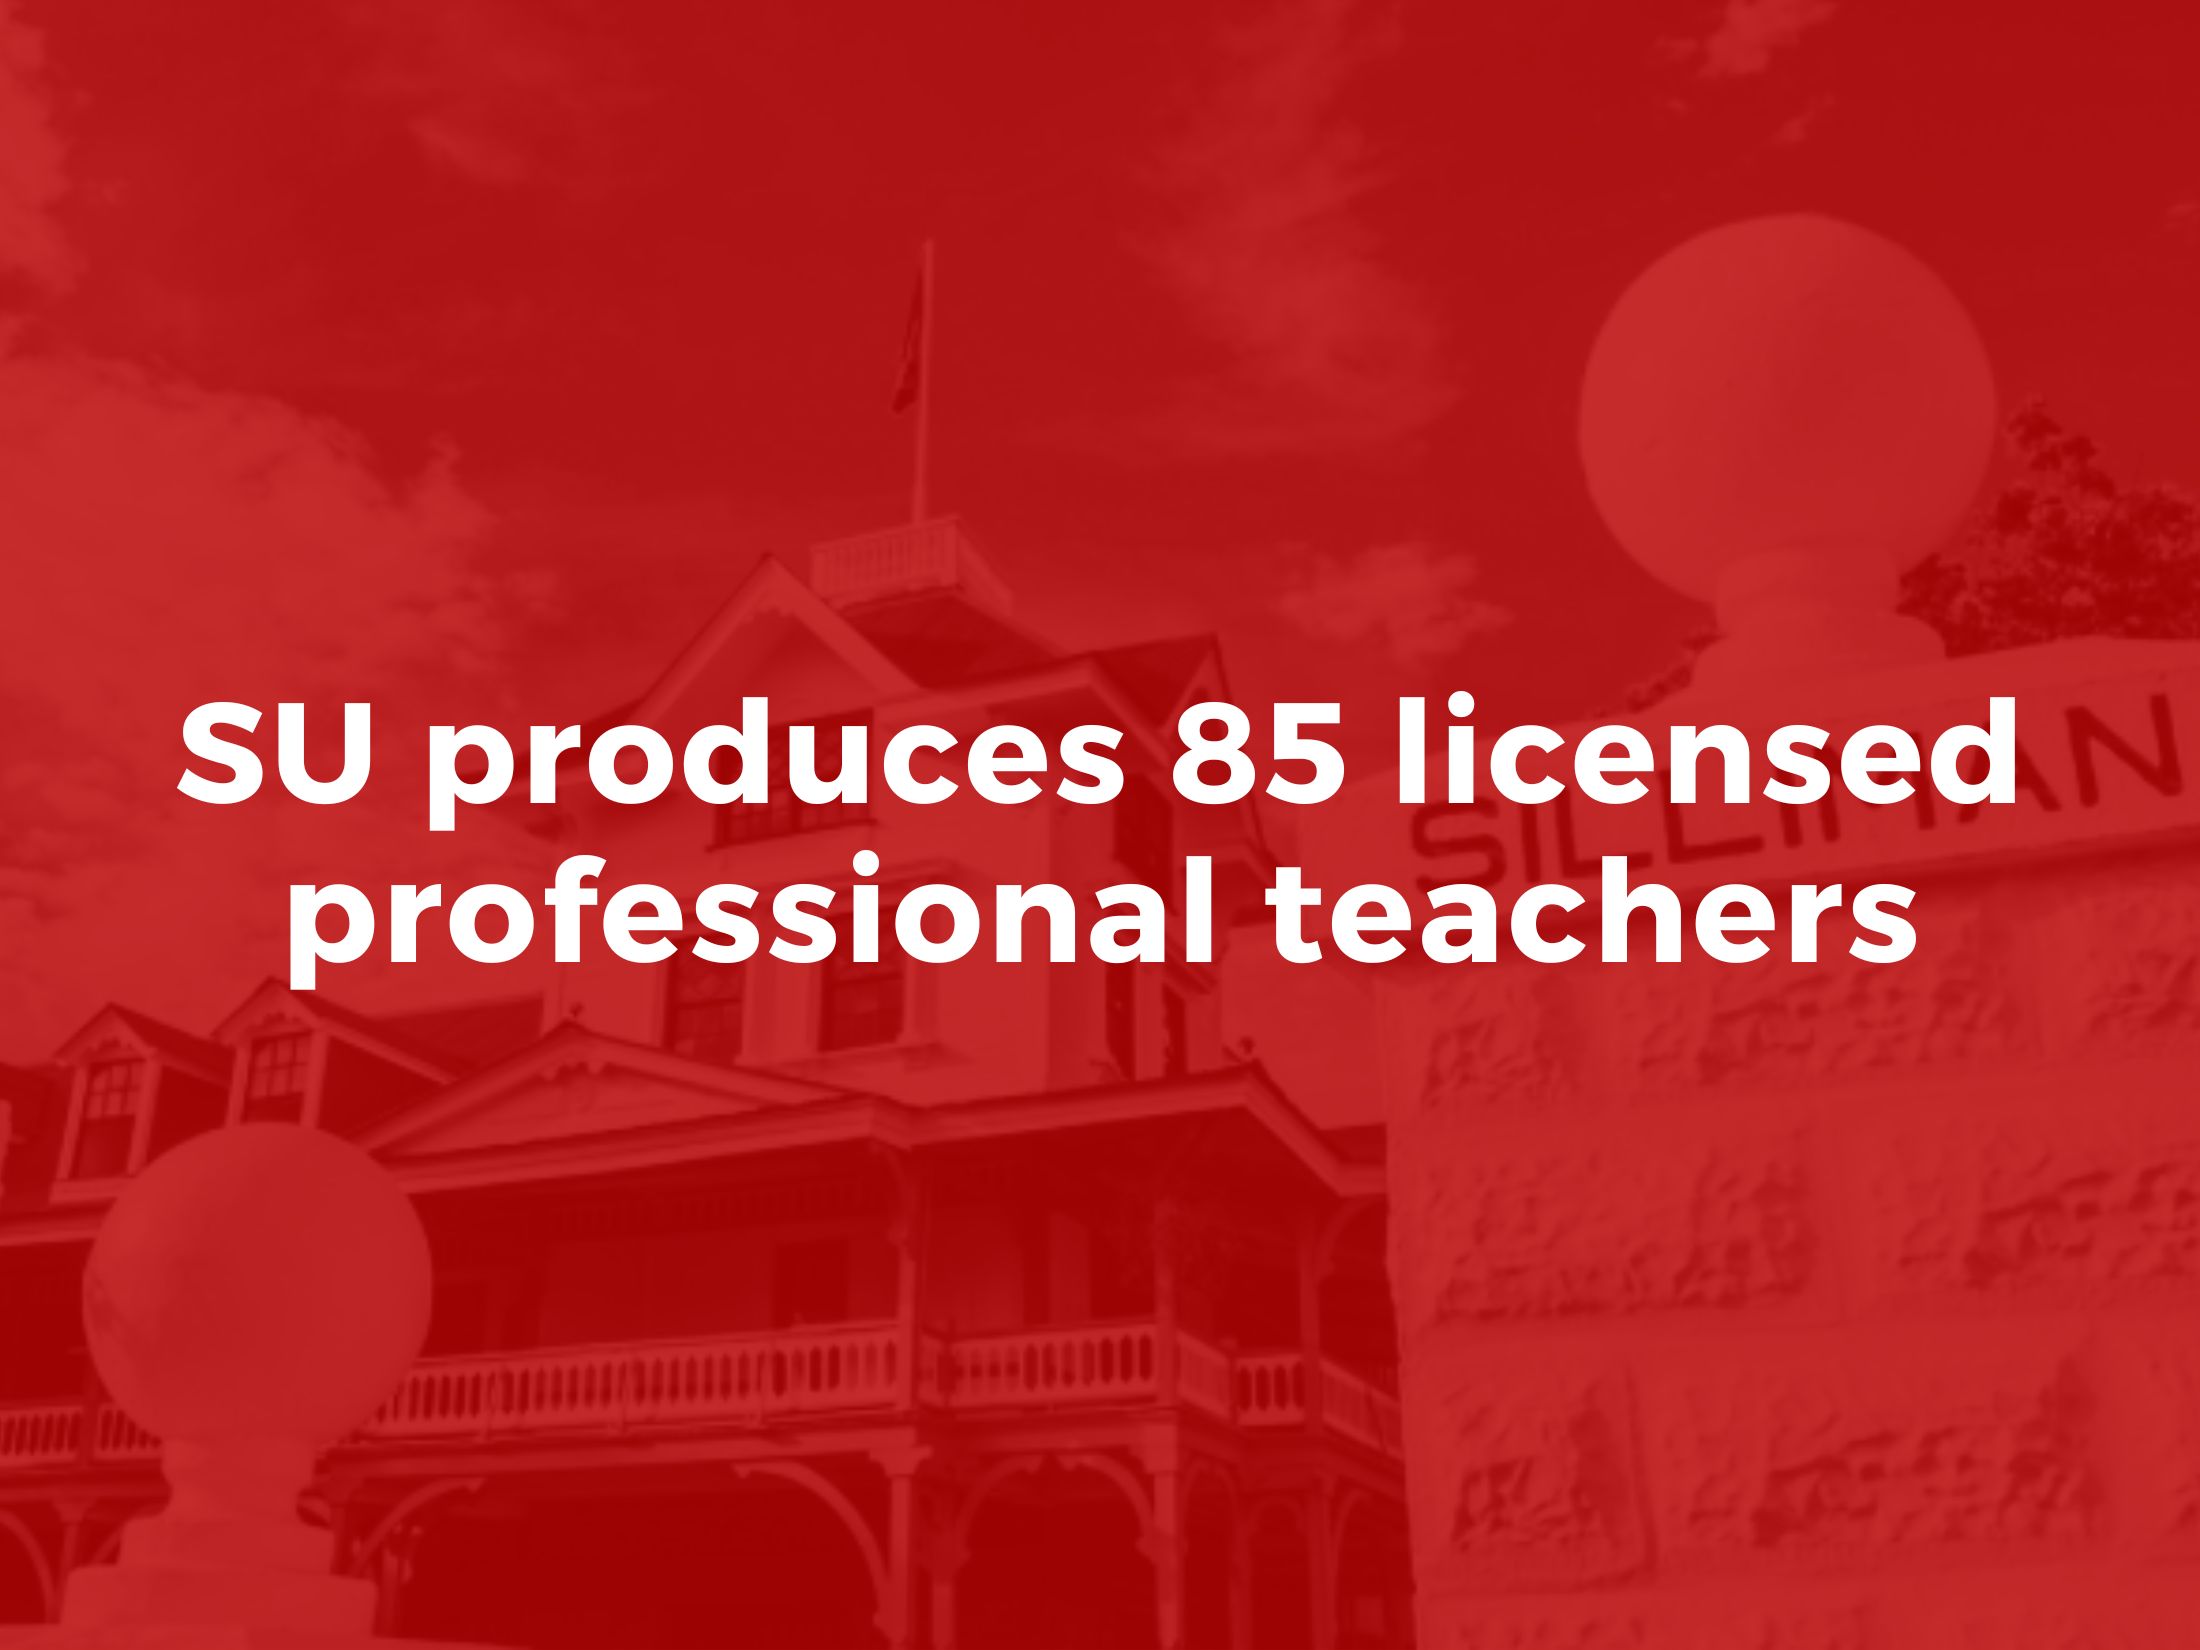 SU produces 85 licensed professional teachers